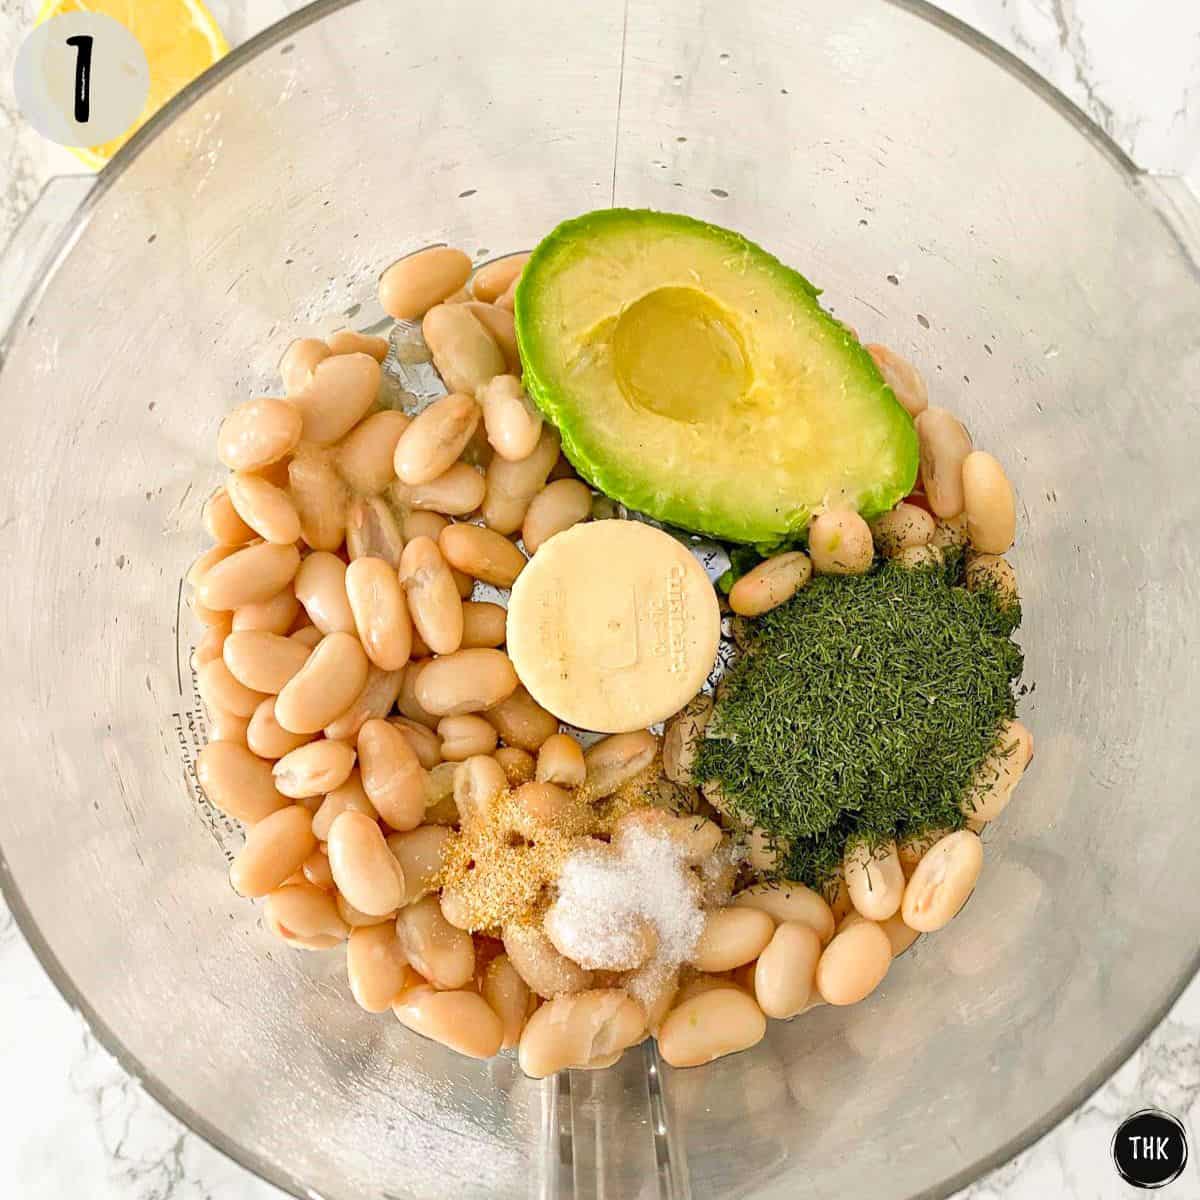 White beans, avocado, and seasoning inside food processor bowl.